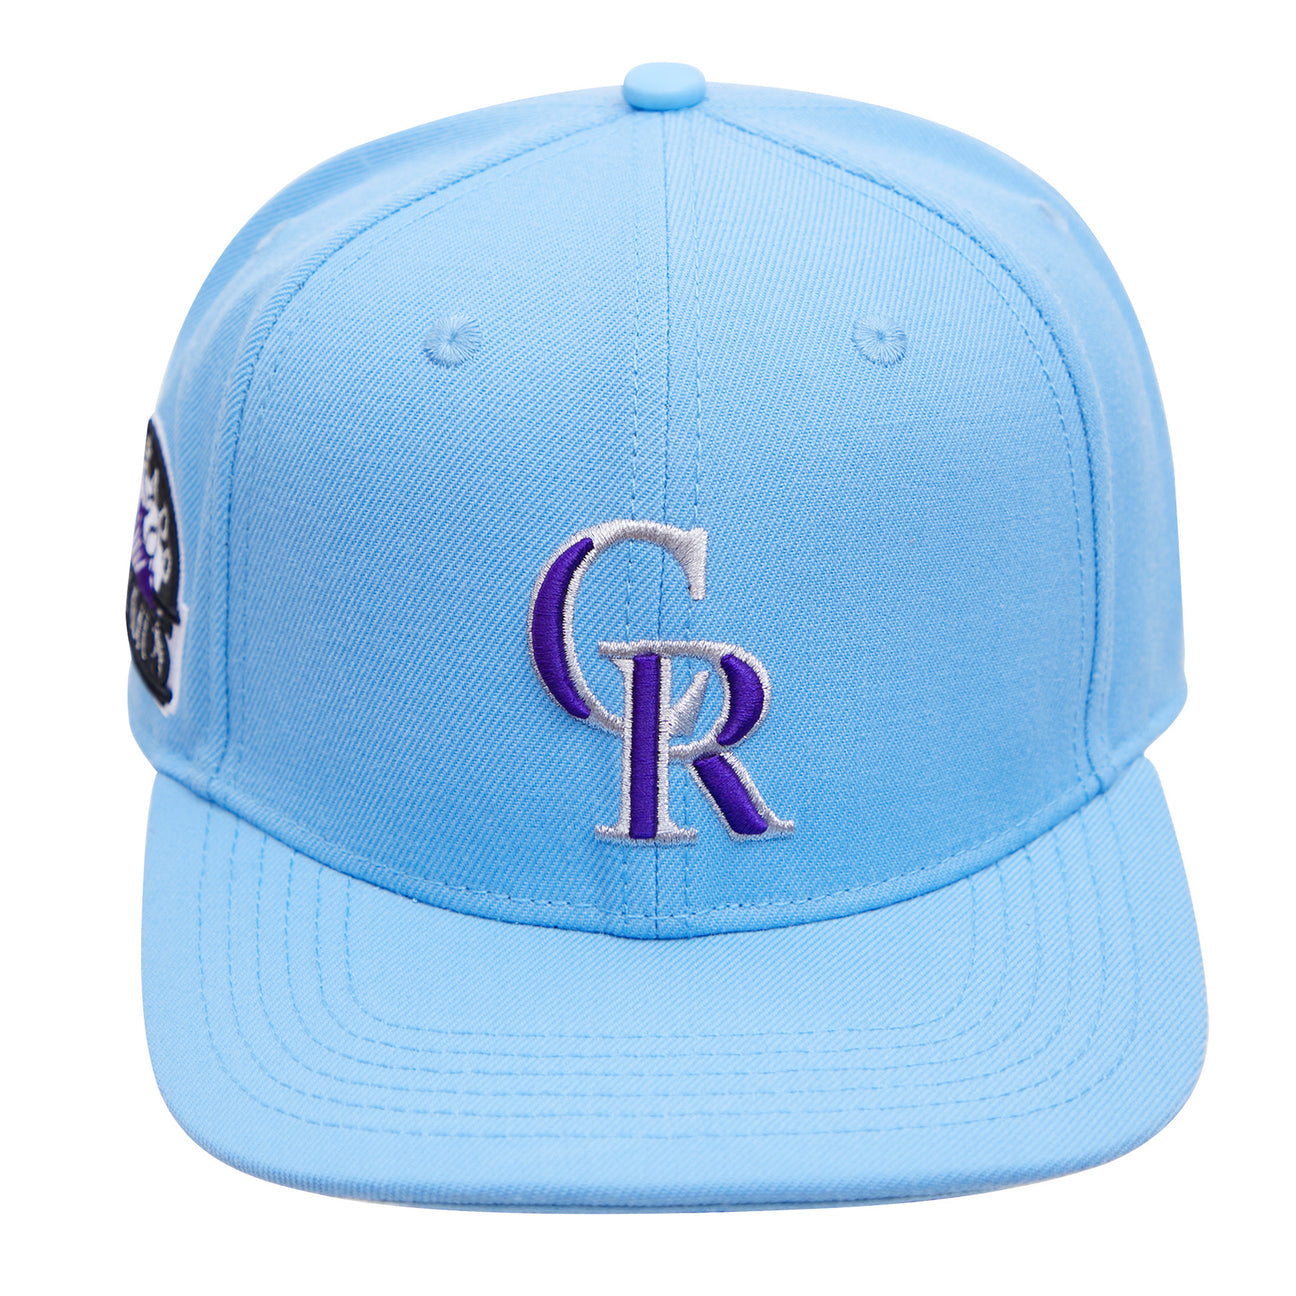 Pro Standard Colorado Rockies Classic Logo Snapback Hat